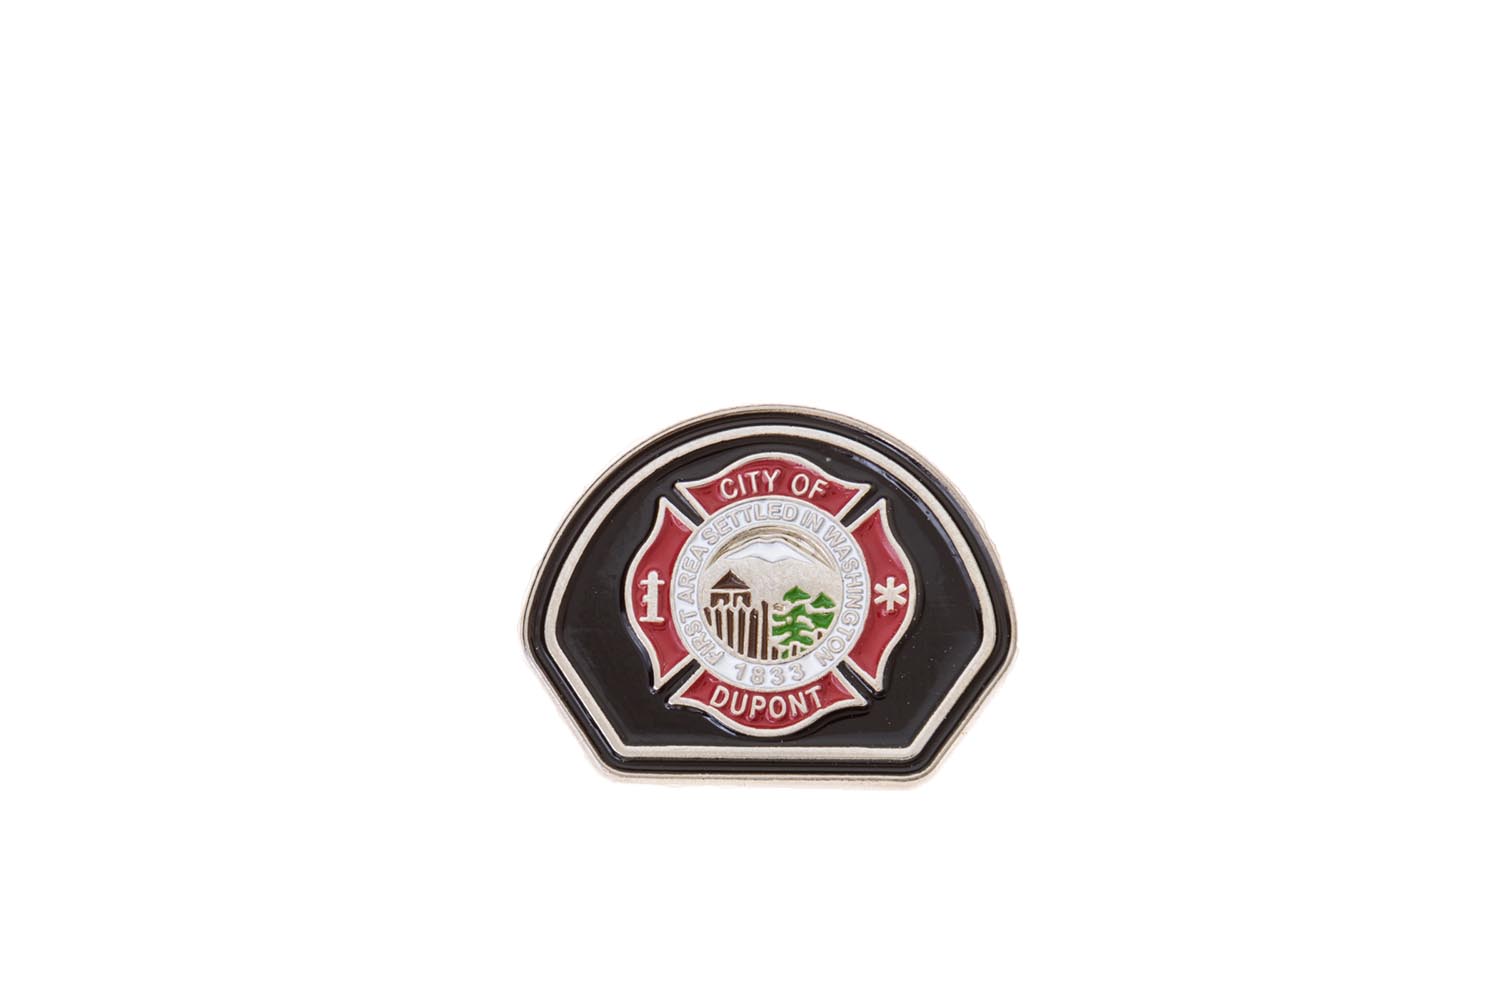 Fire department lapel pins